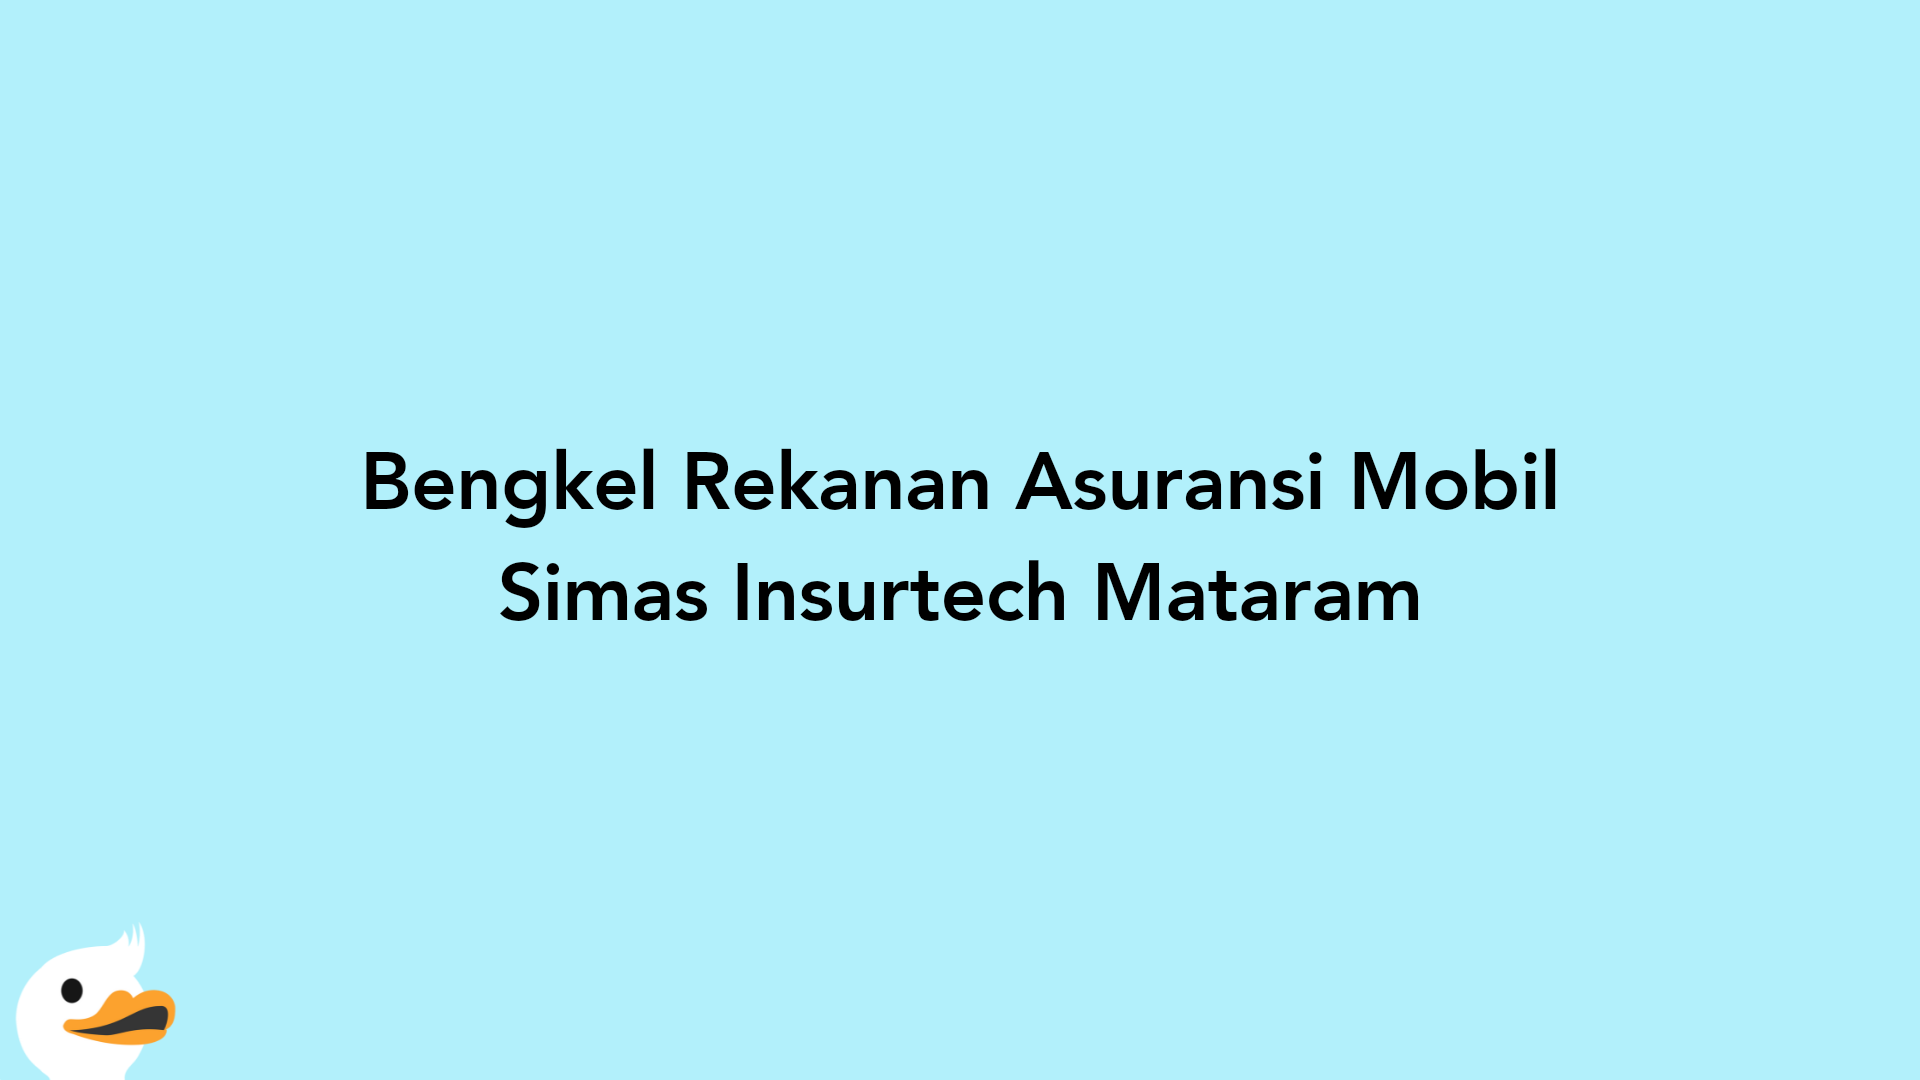 Bengkel Rekanan Asuransi Mobil Simas Insurtech Mataram